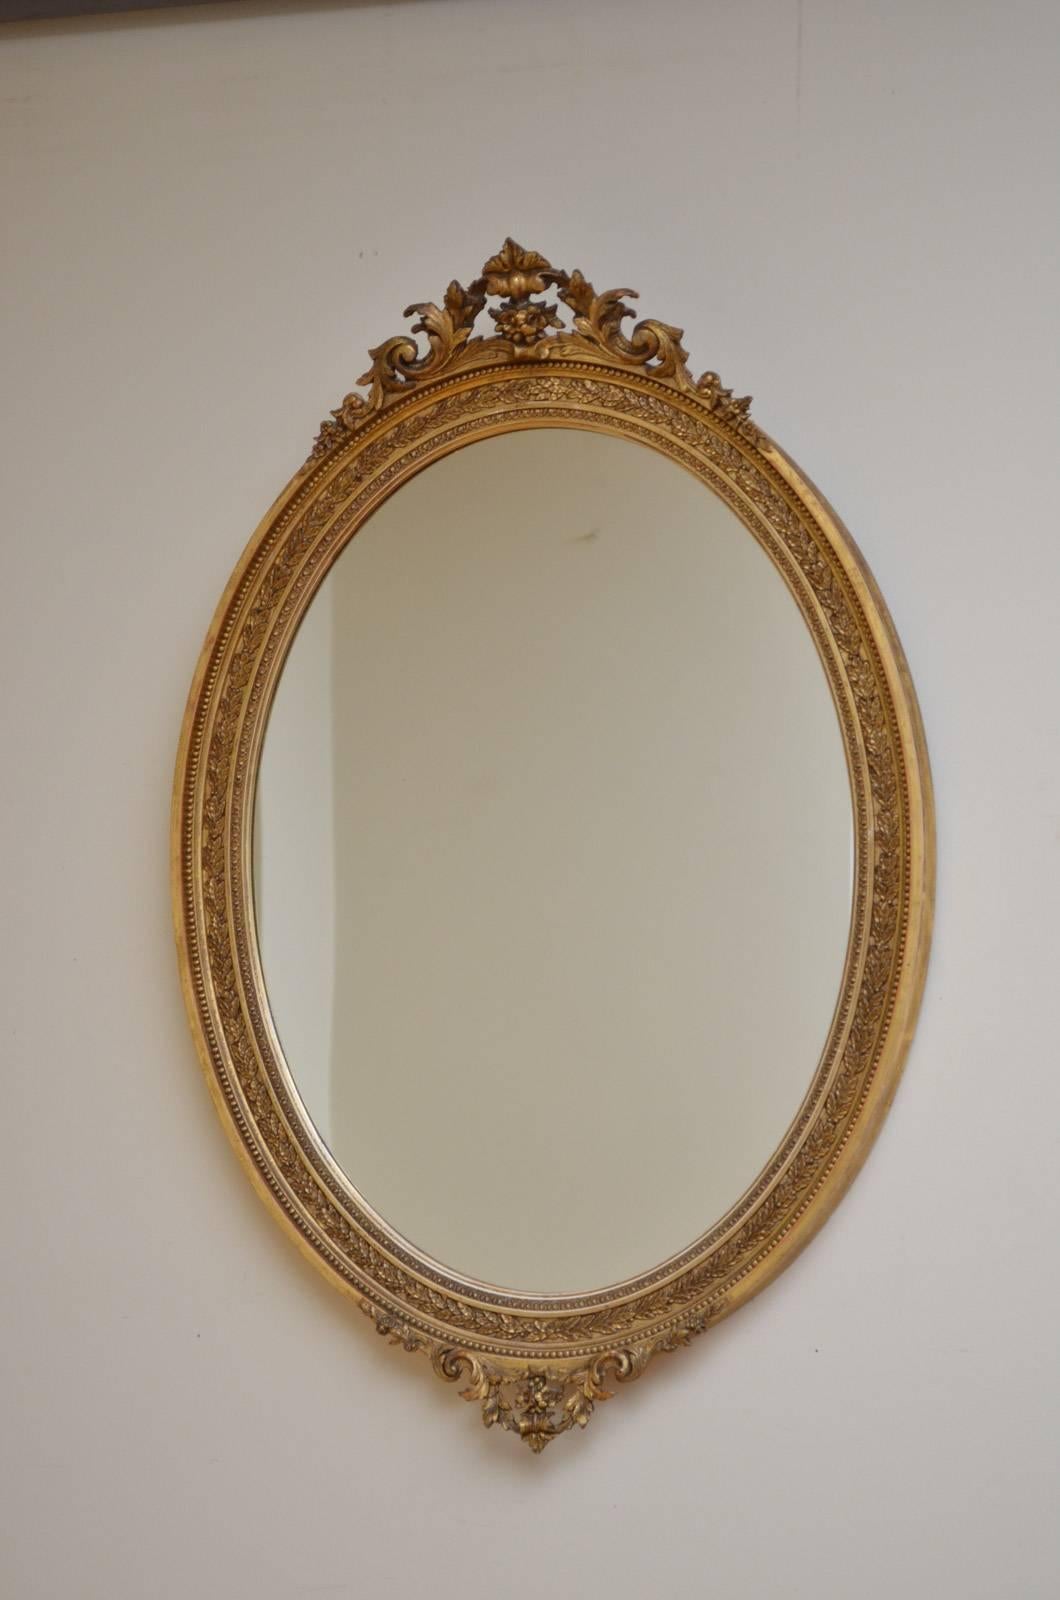 K0330 Victorian gilded wall mirror of oval outline retaining original gilt, circa 1870
Measure: H 30